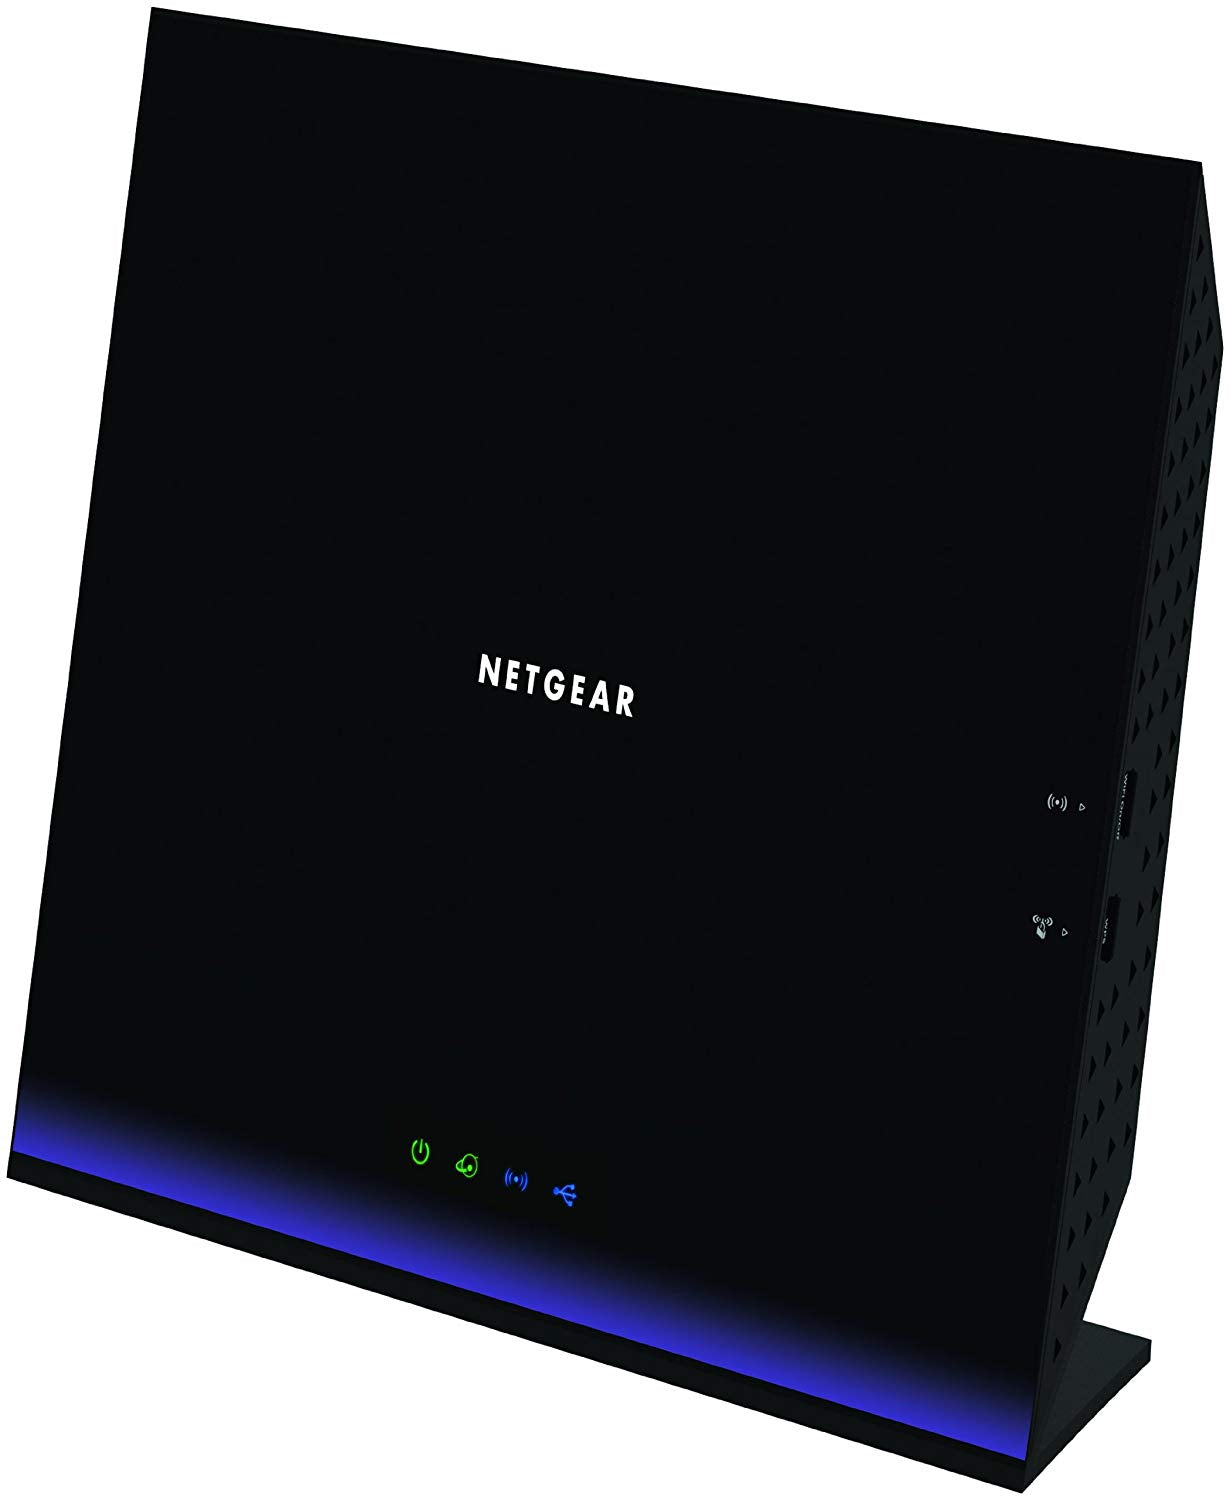 Netgear R6250-100NAR AC1600 Gigabit Dual Band Wi-Fi Router - Certified Refurbished